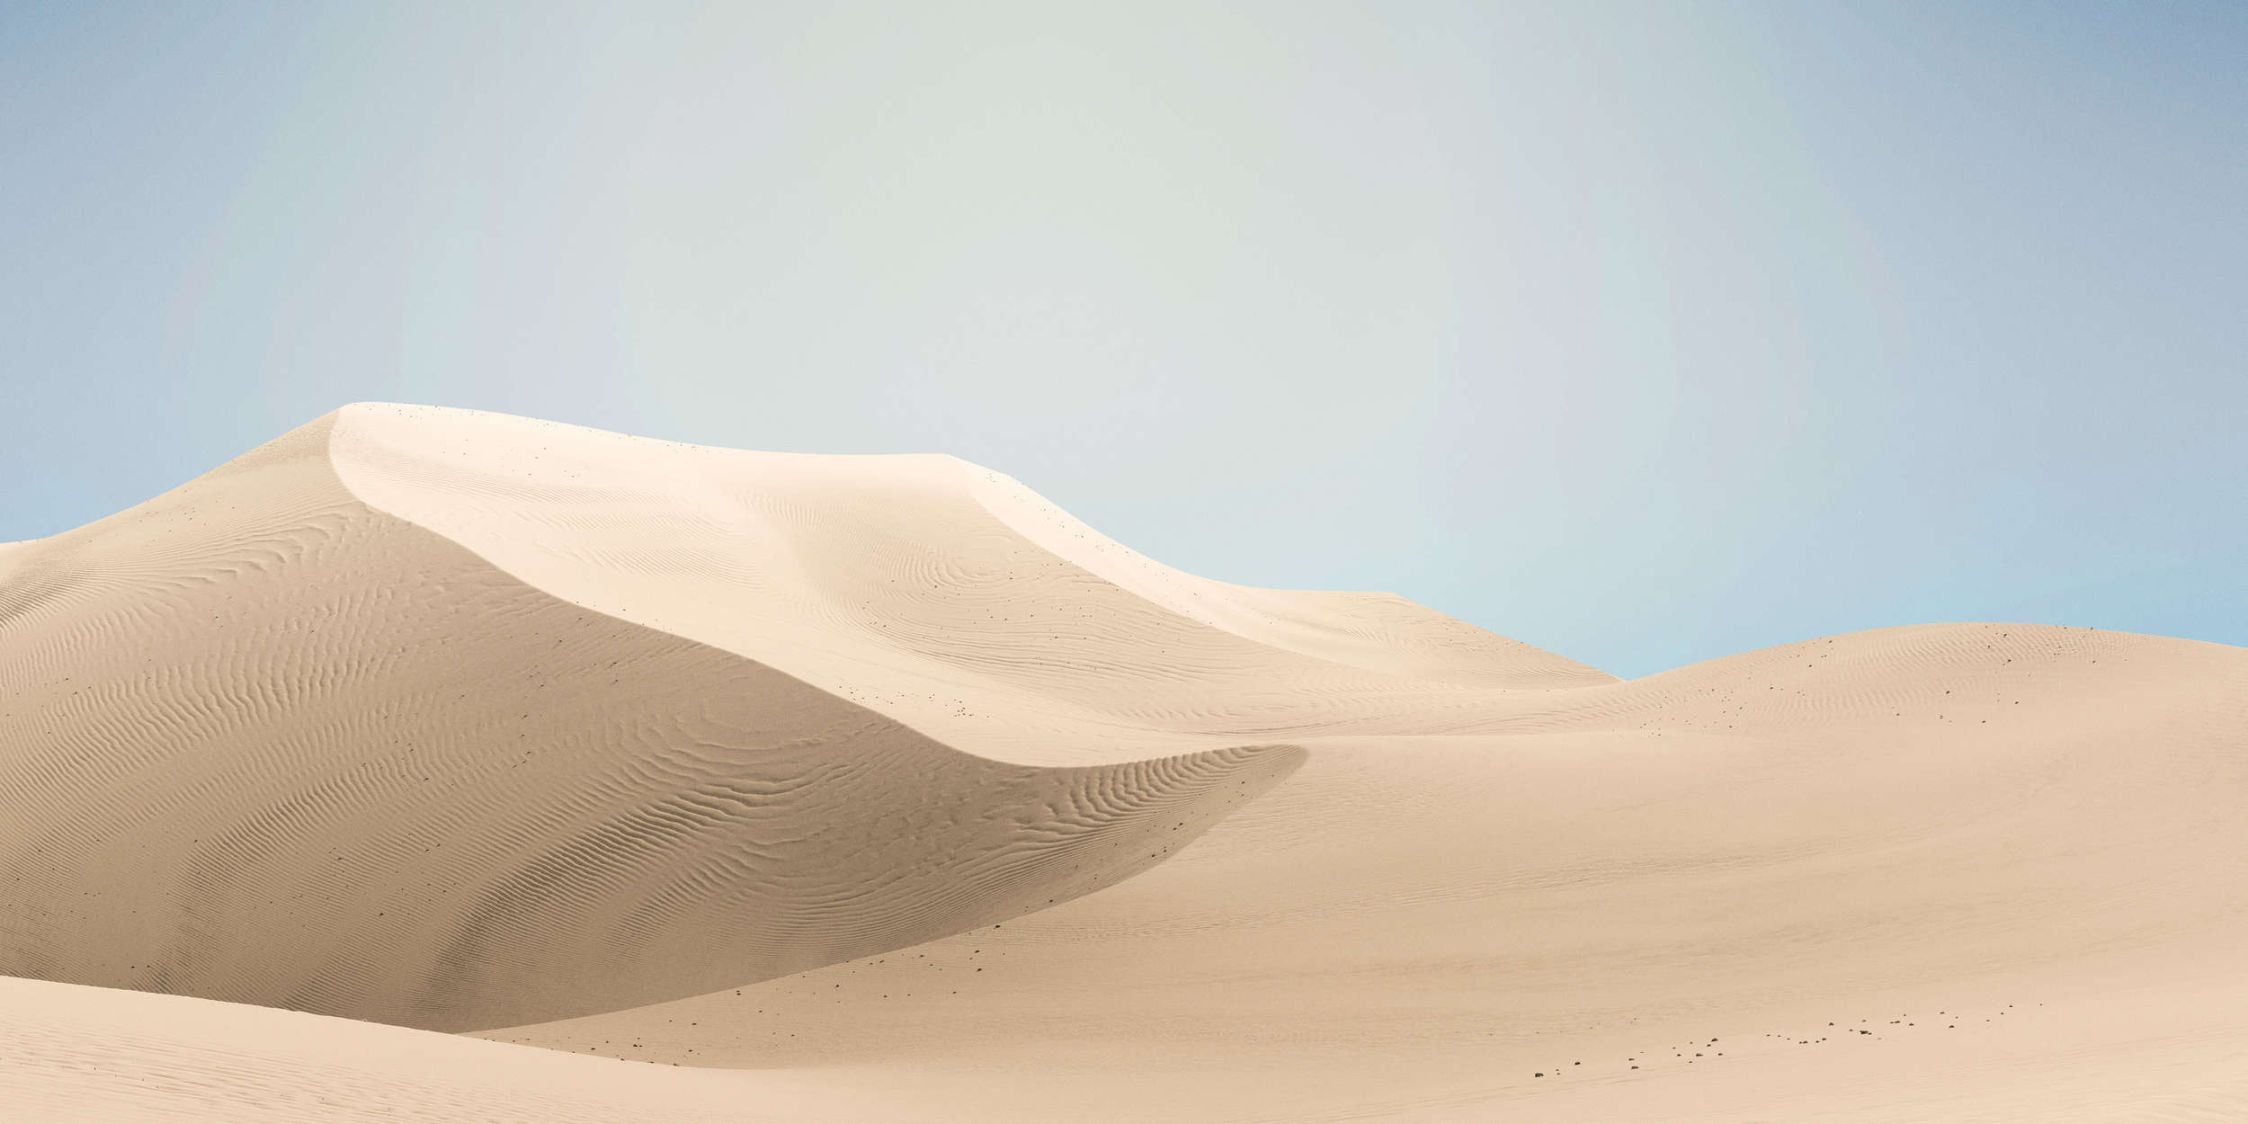             Fotomurali »dune« - paesaggio desertico dai colori pastello - tessuto non tessuto opaco e liscio
        